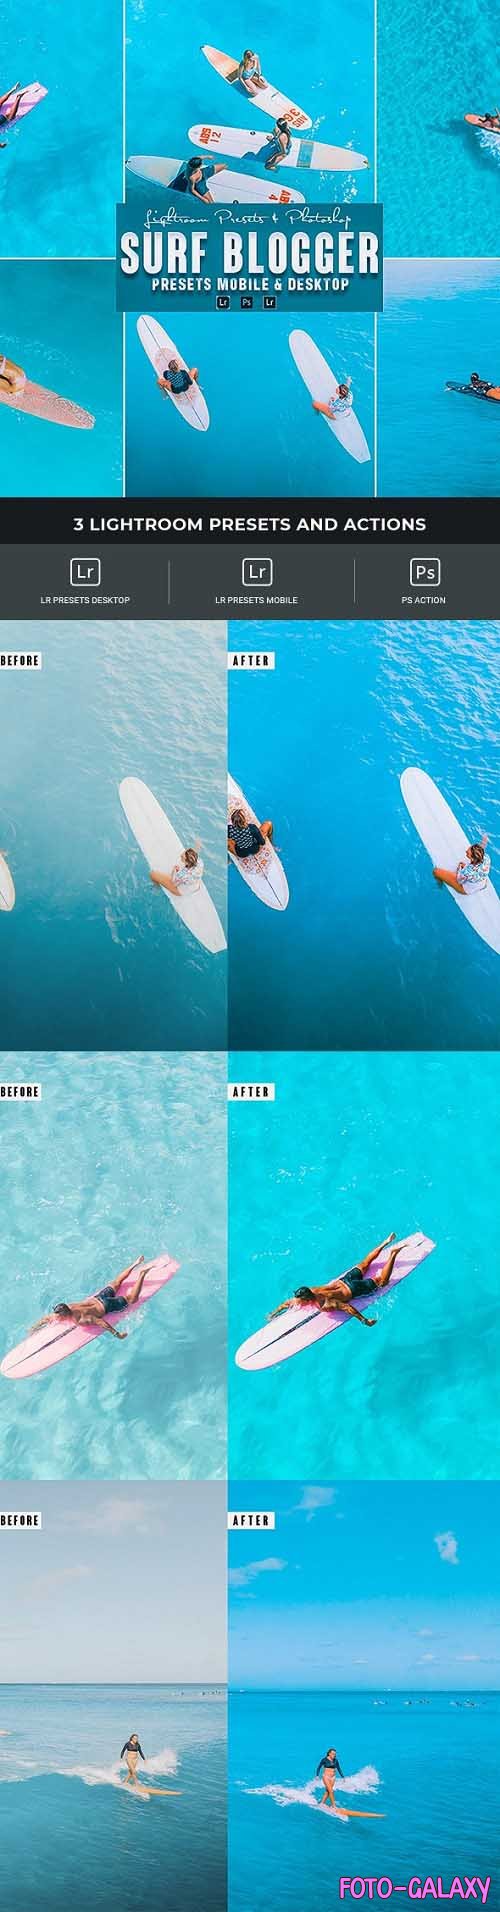 Surf Photoshop Action & Lightrom Presets - 34742132